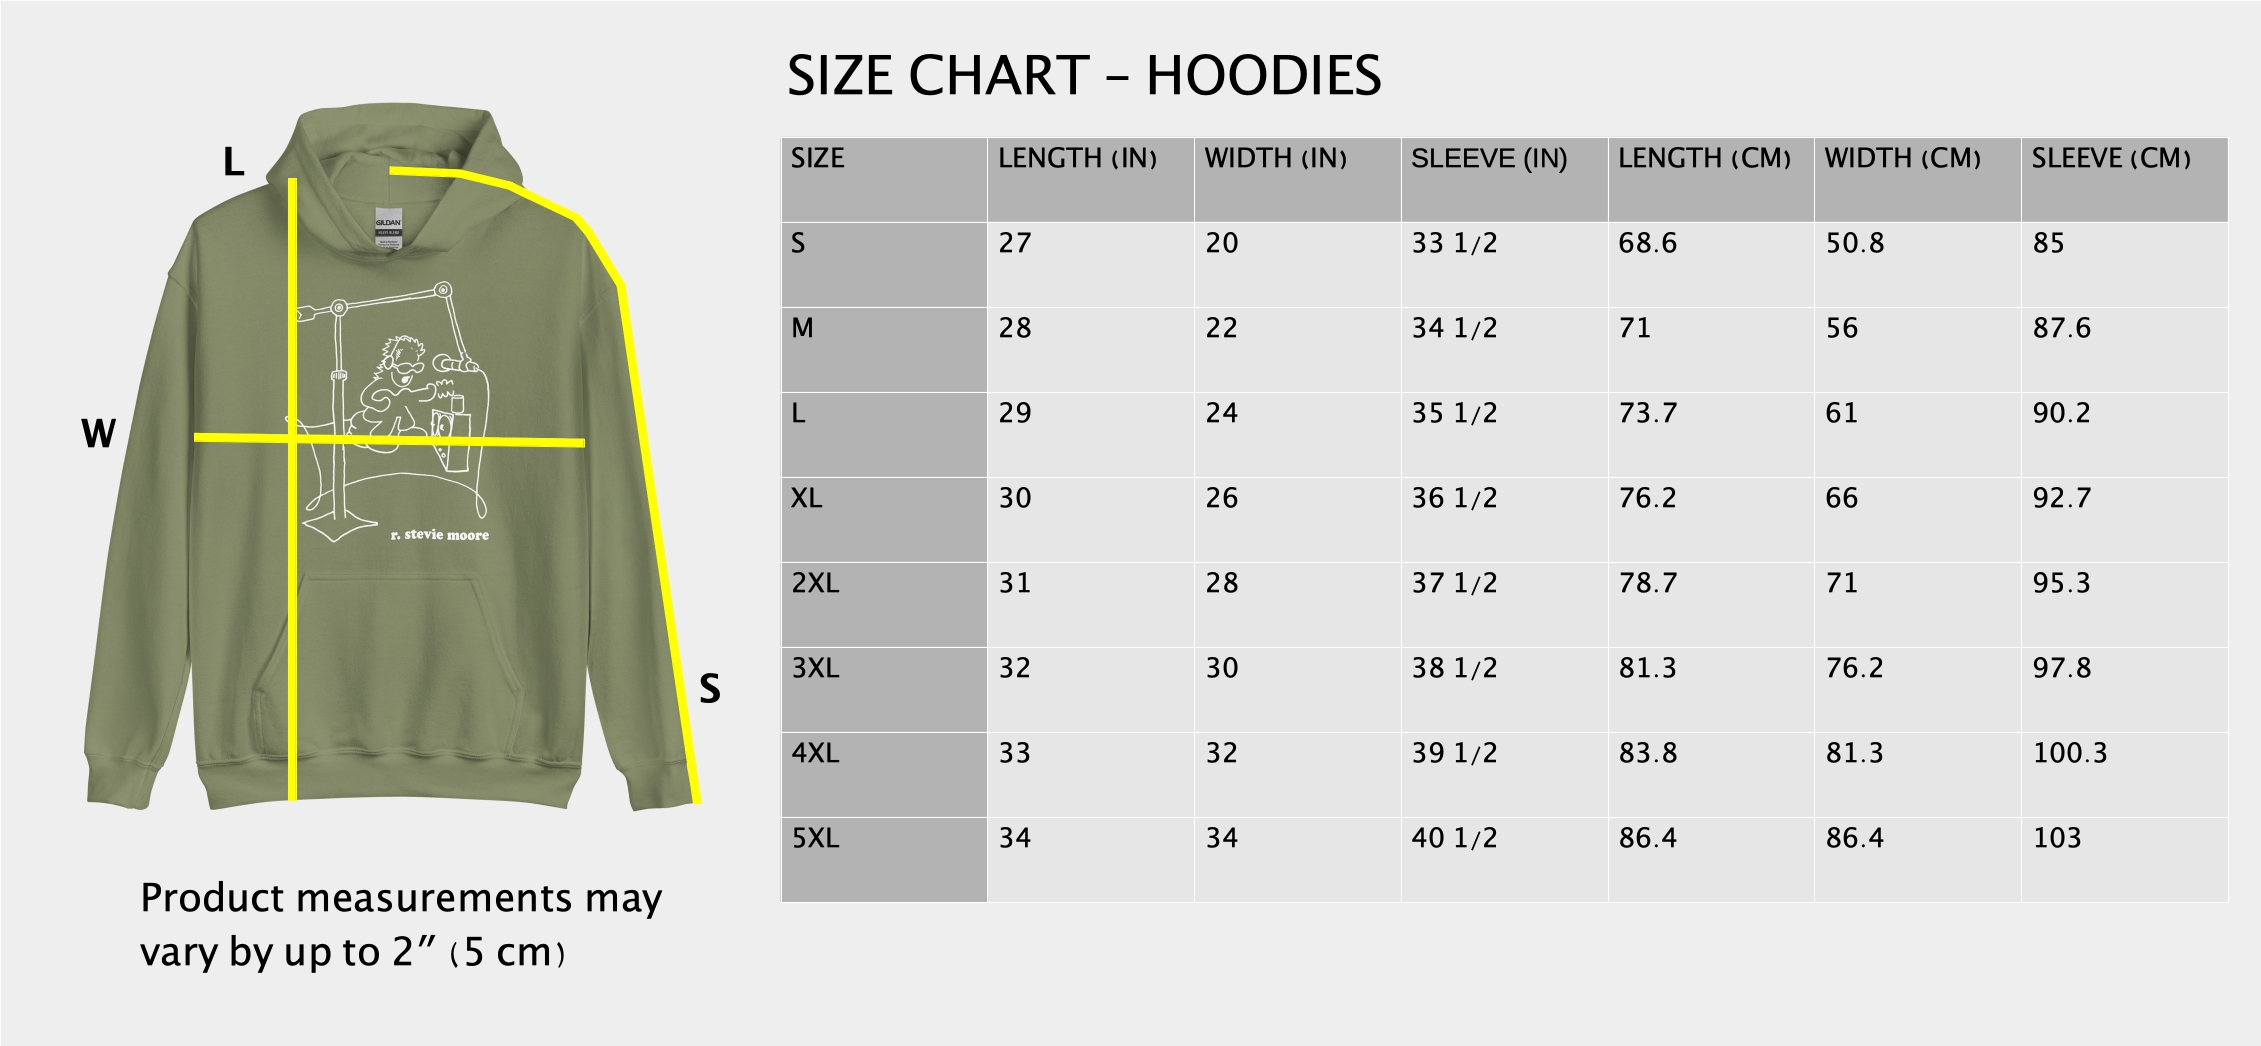 RSM size guide - hoodies